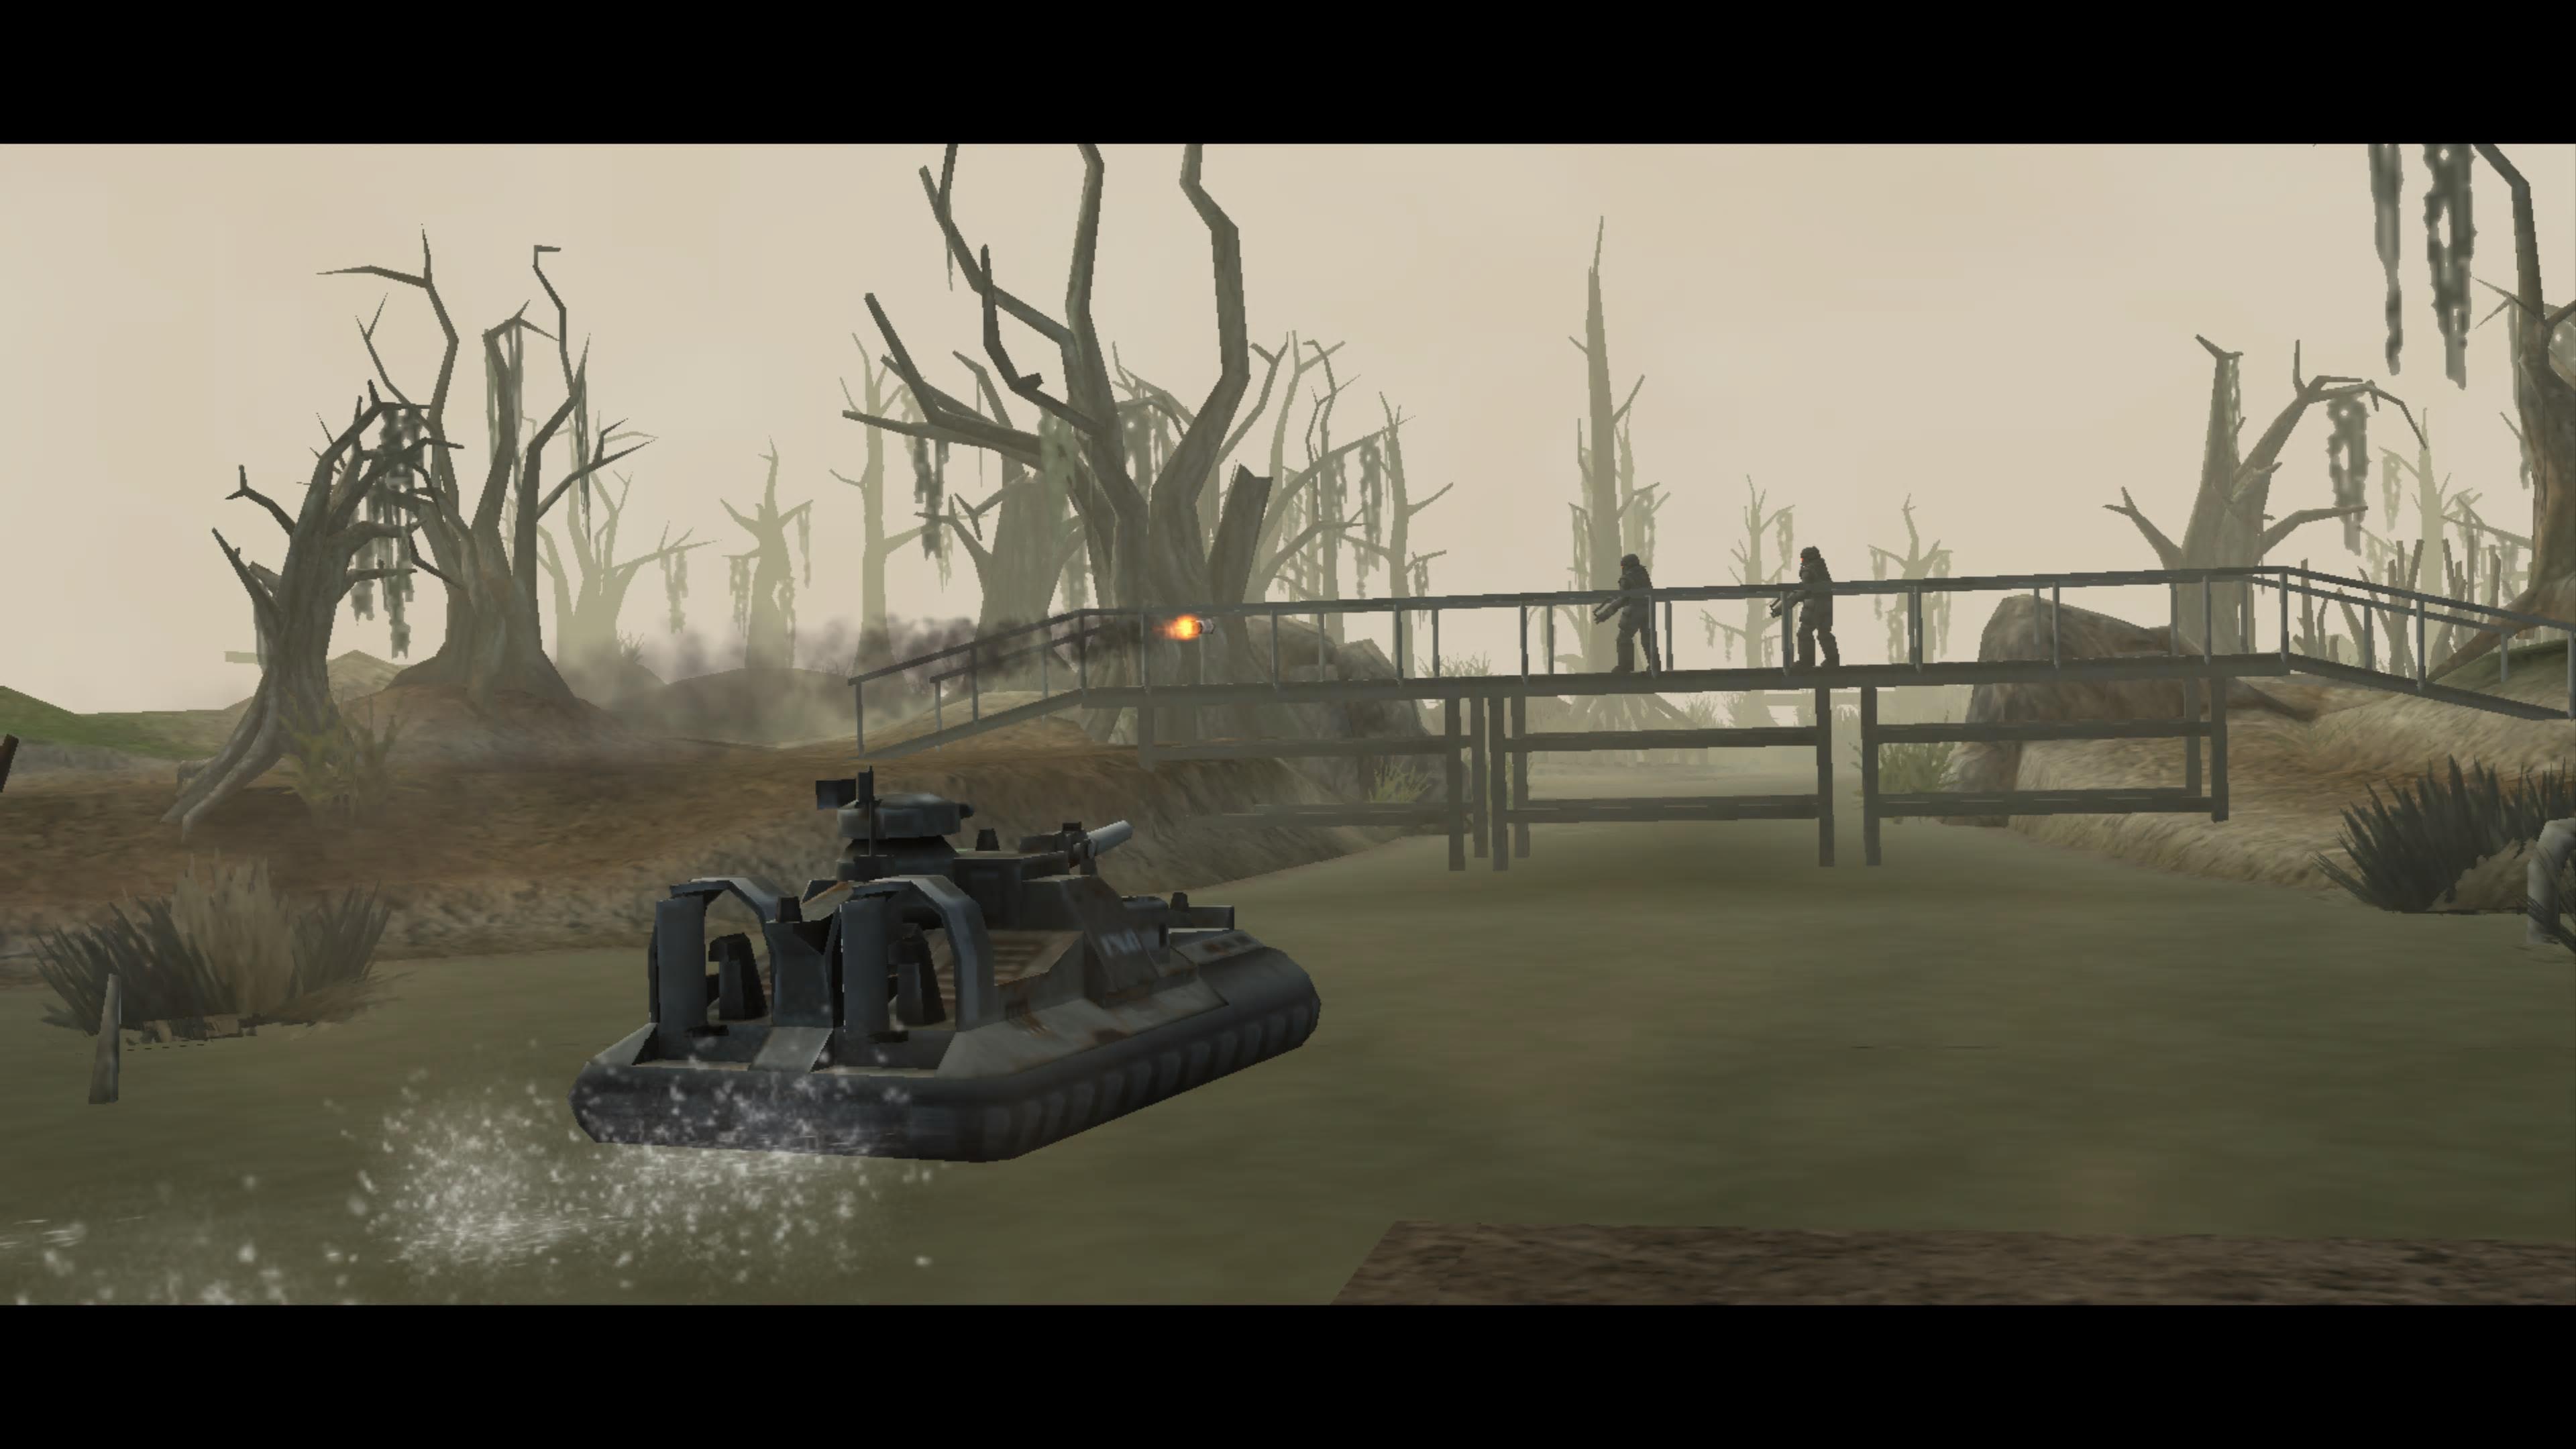 Killzone: Liberation on PS5 PS4 — price history, screenshots, discounts •  USA